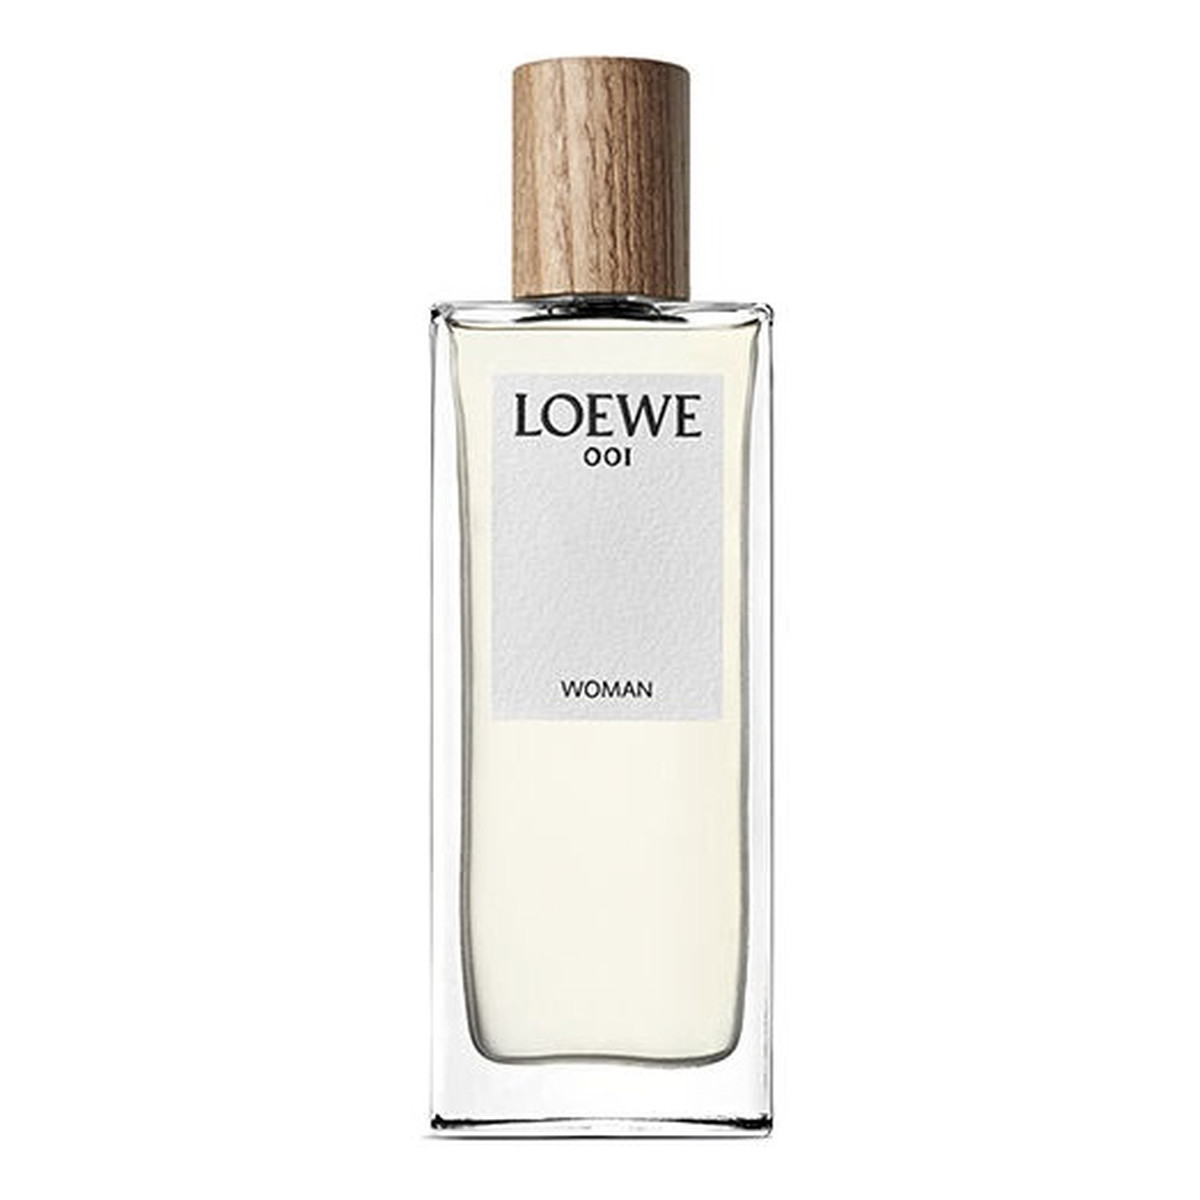 Loewe 001 Woman Woda perfumowana spray 100ml